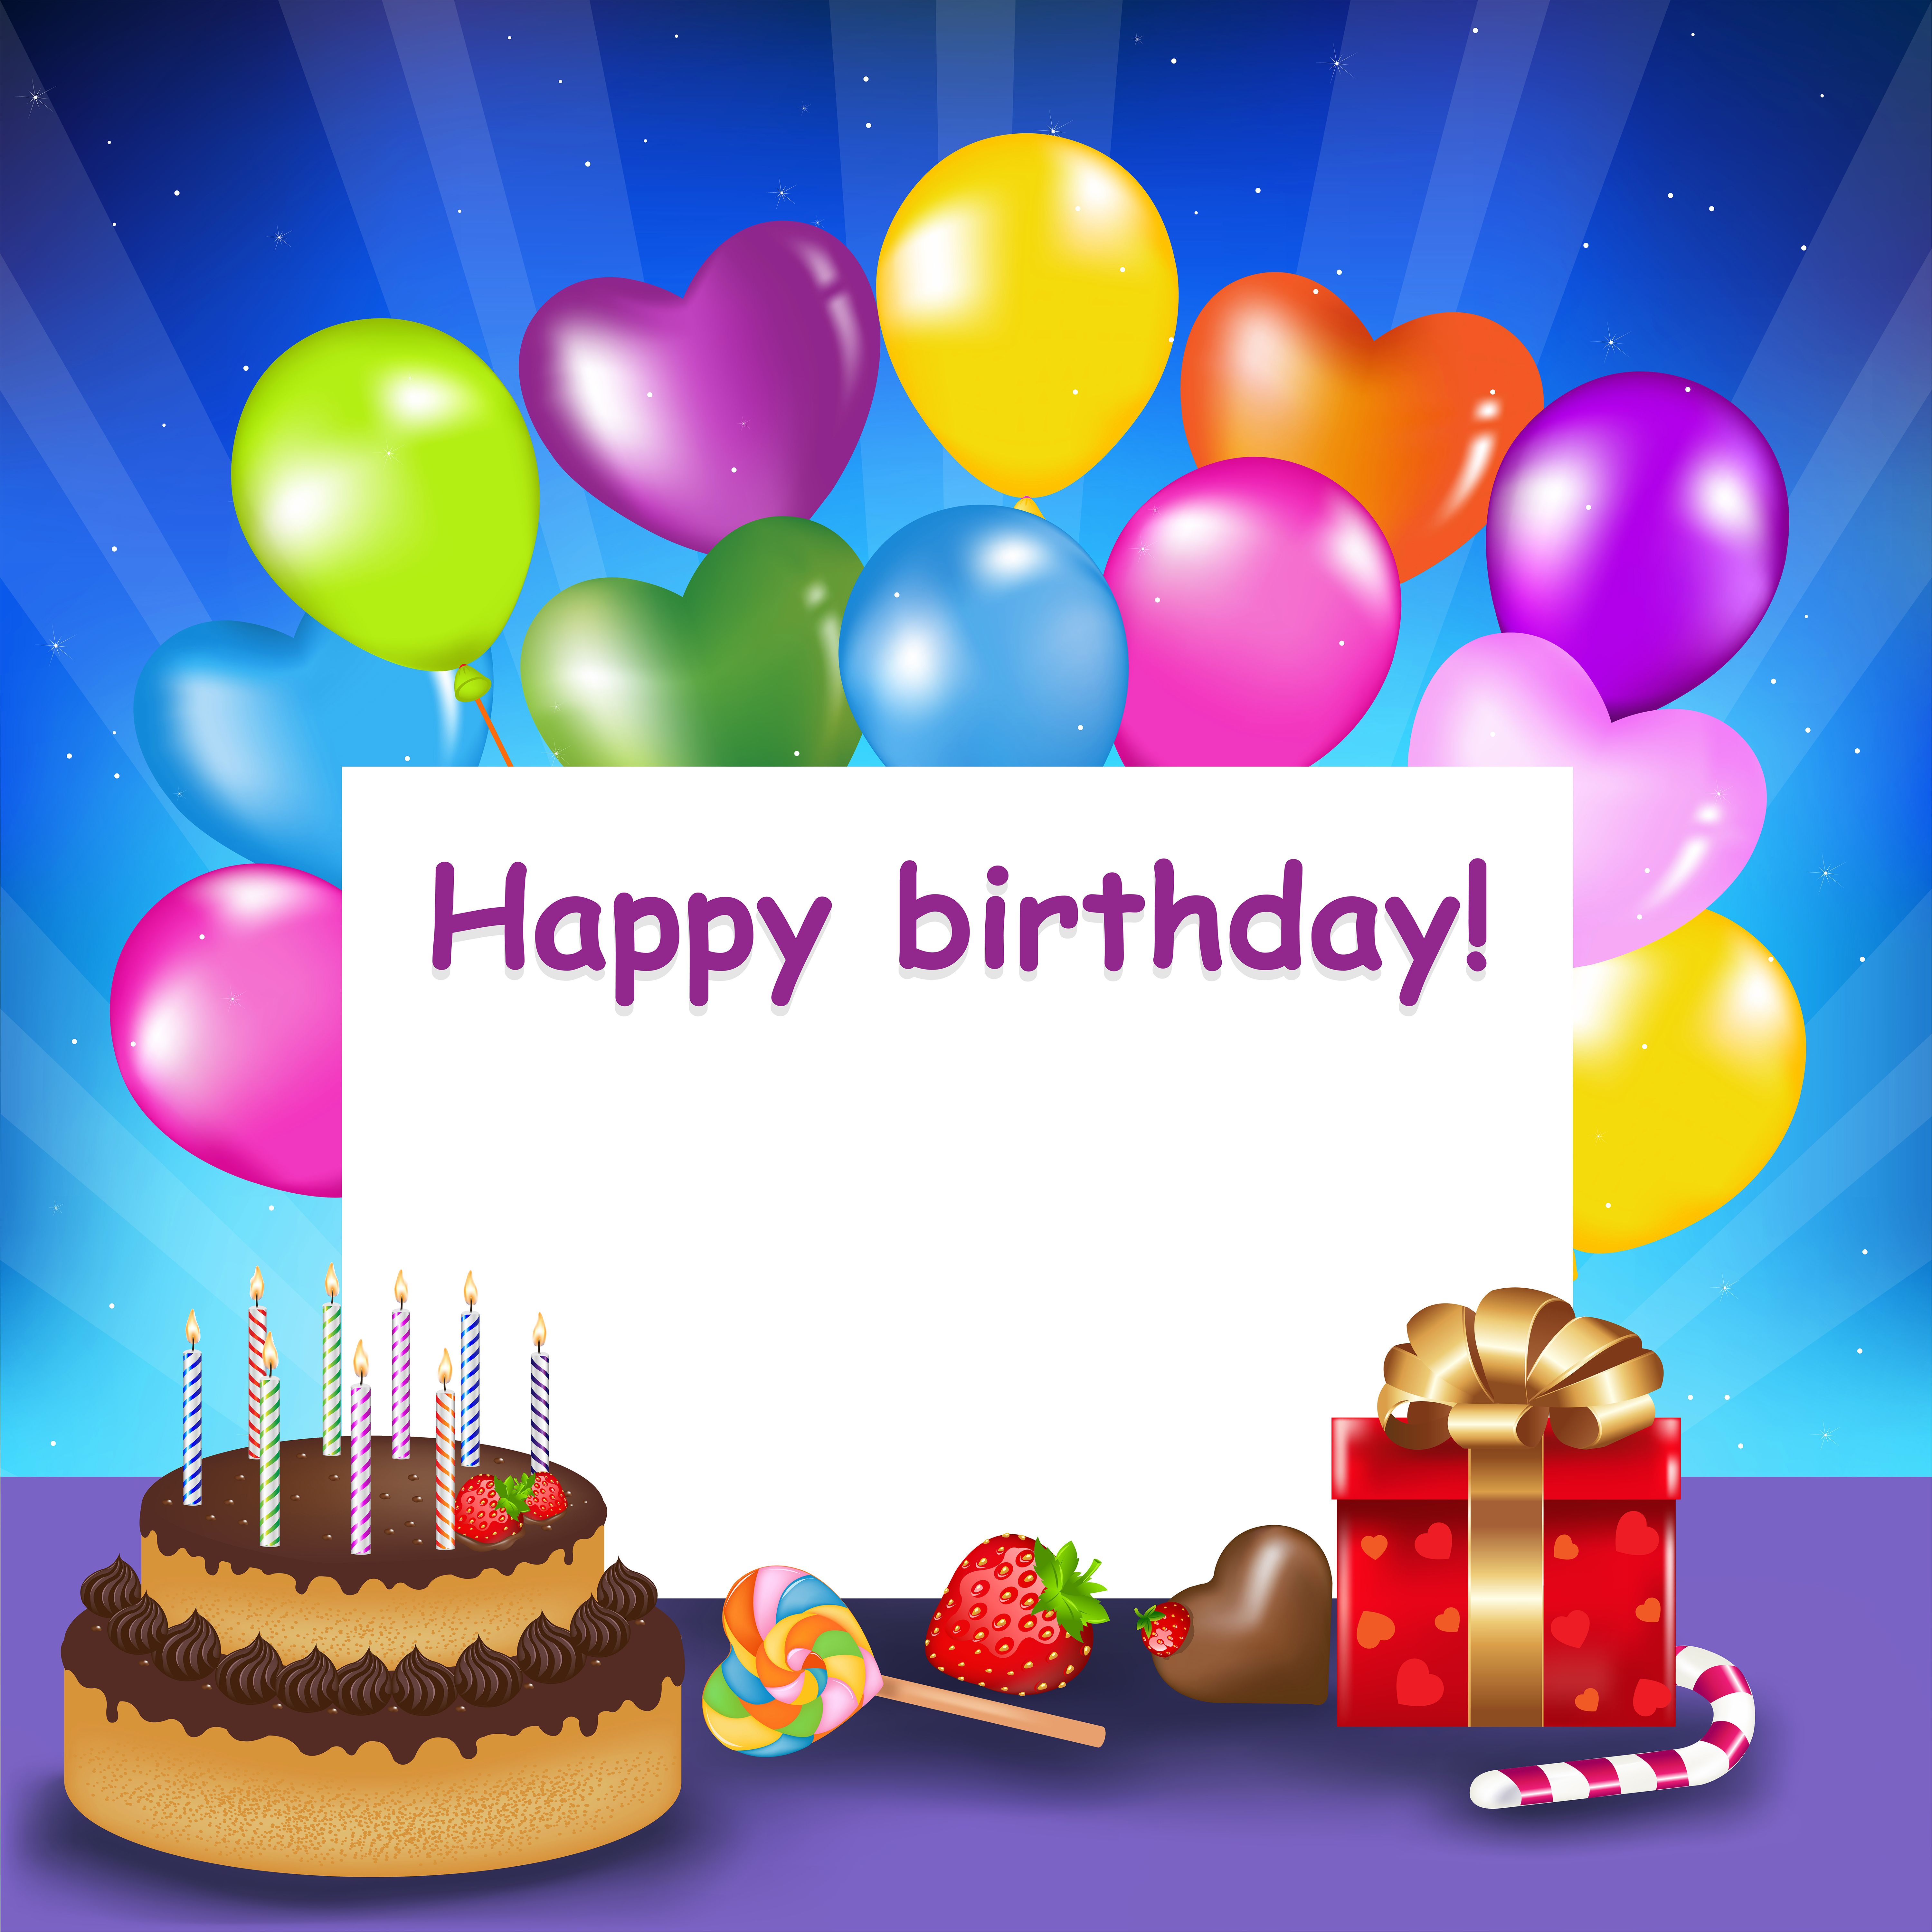 Free Birthday Wishes Hd Wallpaper, Birthday Wishes Hd Wallpaper Download -  WallpaperUse - 1